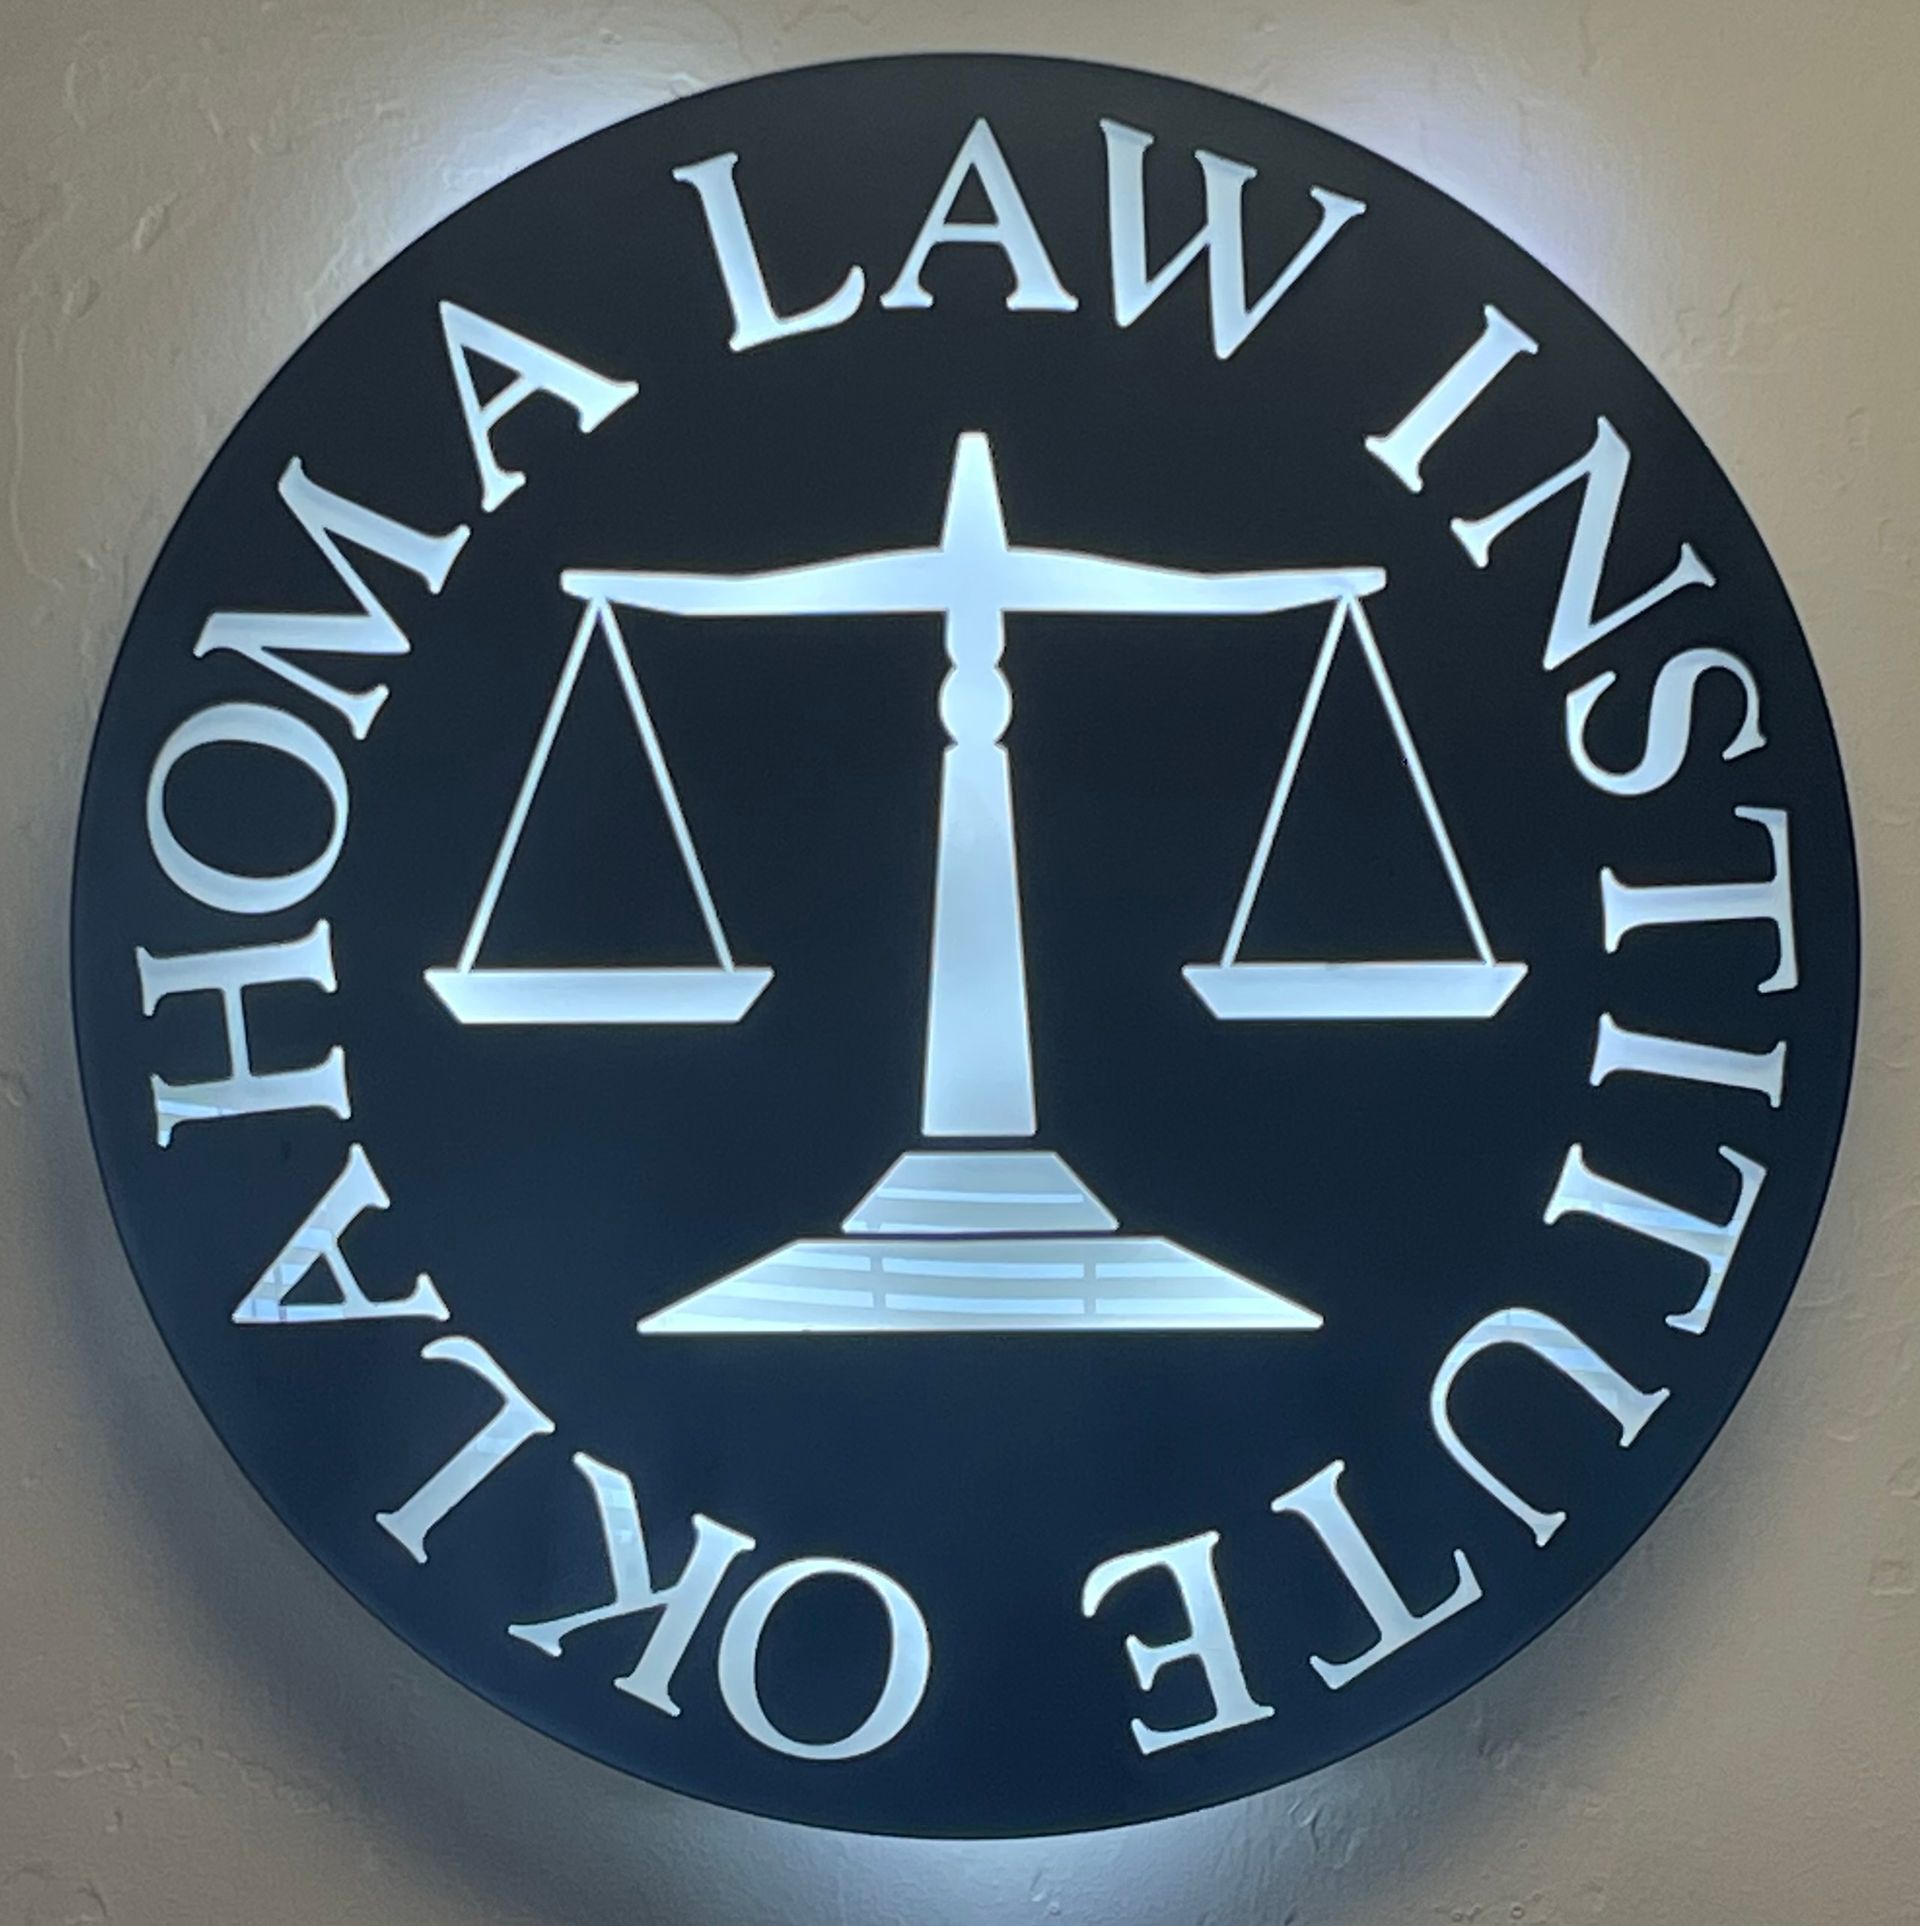 Oklahoma Law Institute